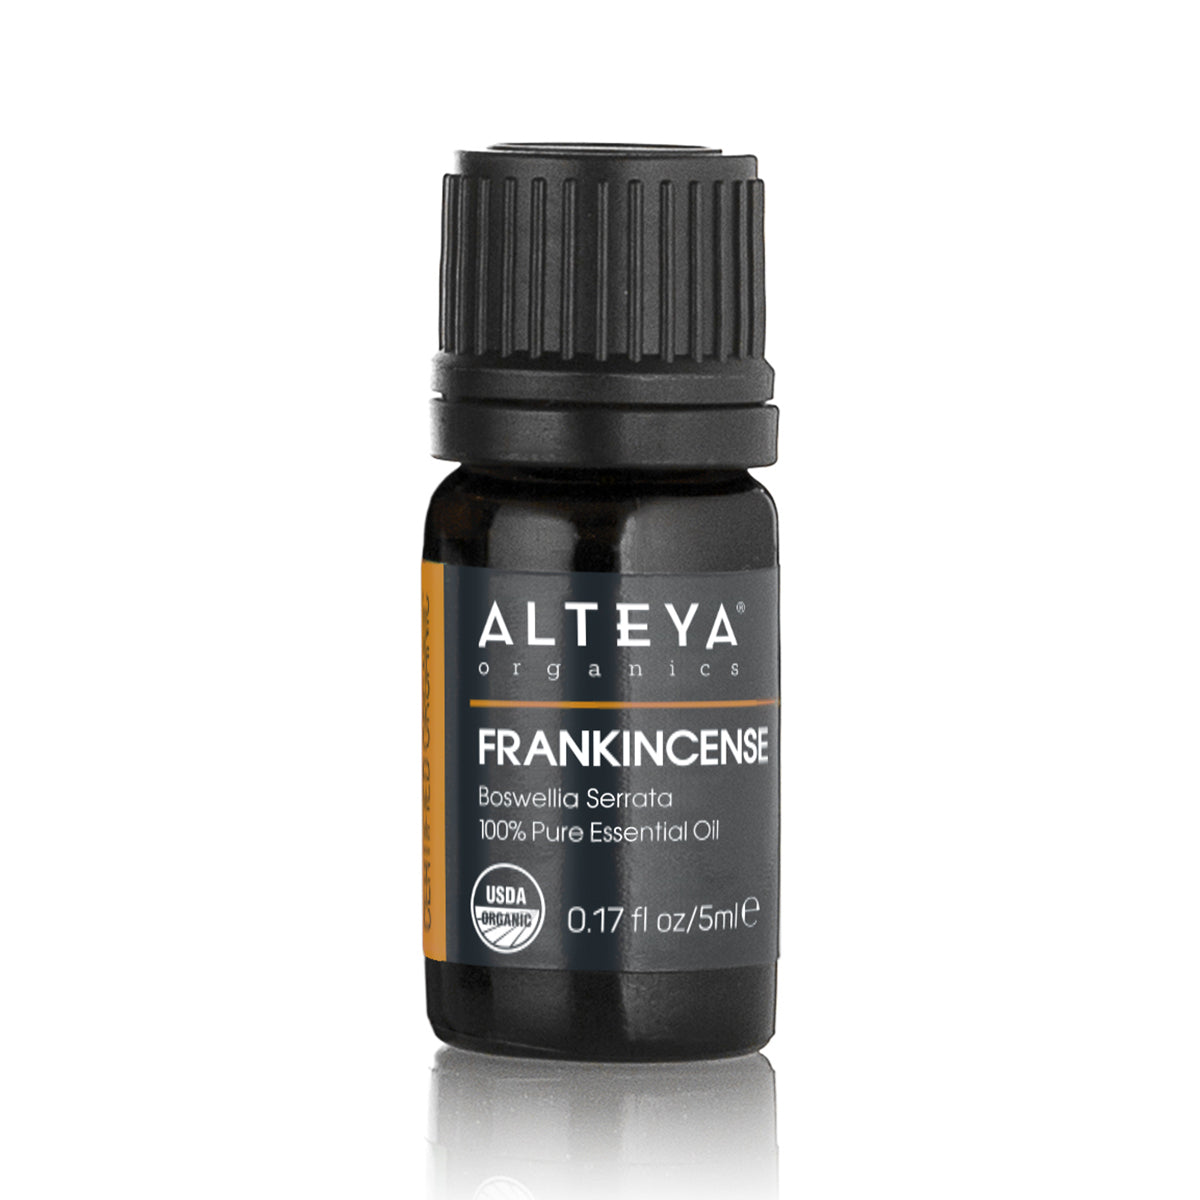 A bottle of Alteya Organics Frankincense (Boswellia Serrata) Essential Oil.